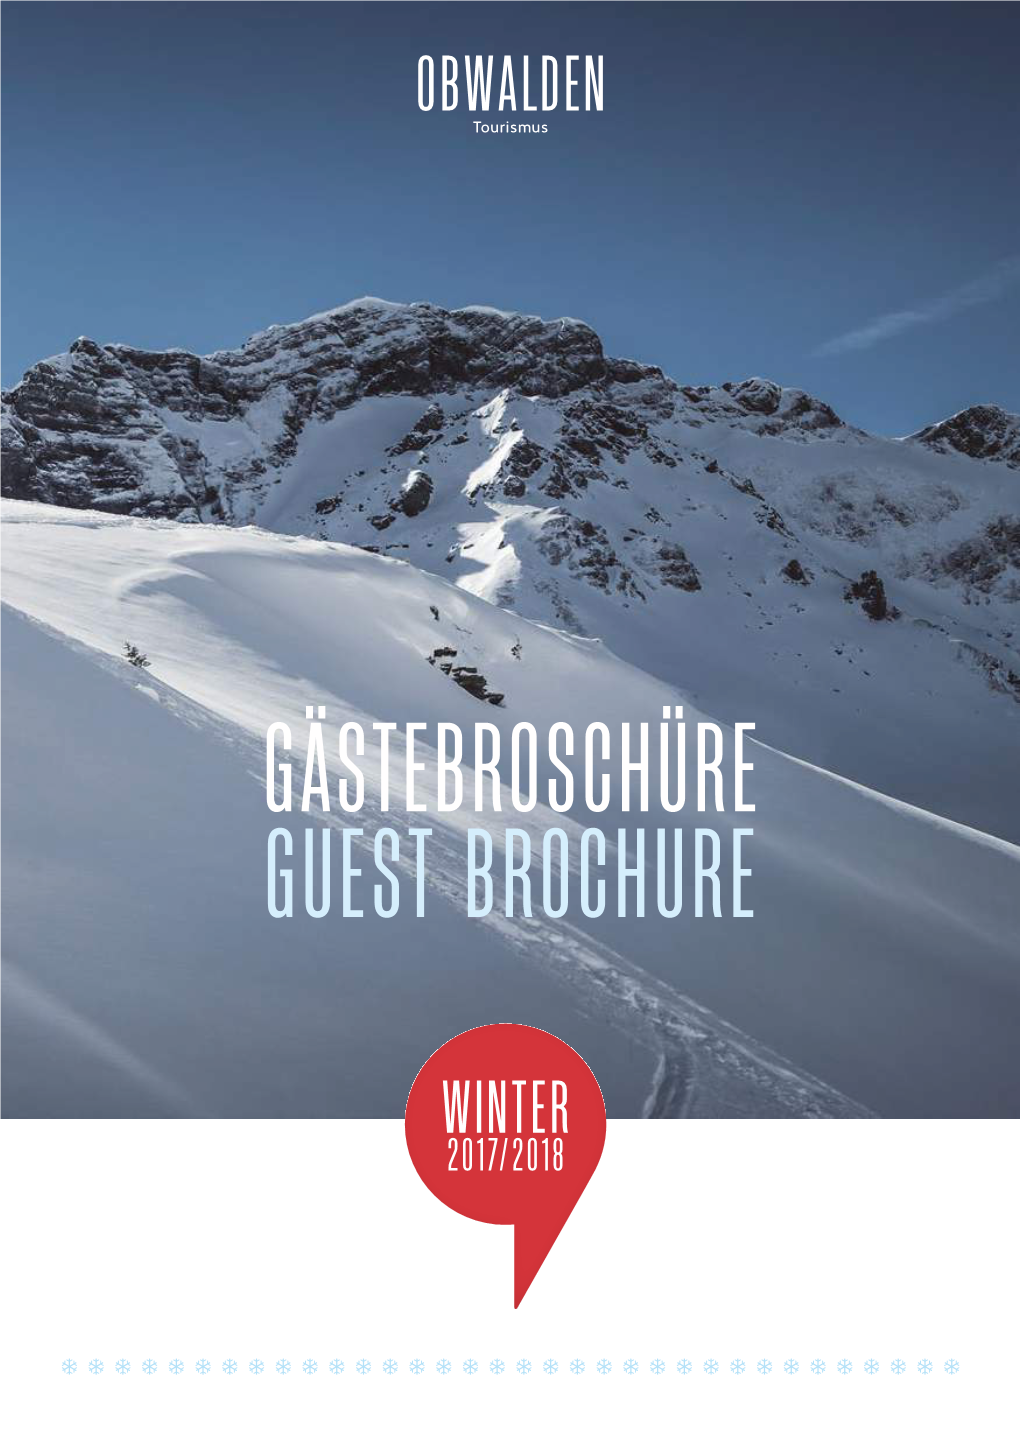 Gästebroschüre Guest Brochure